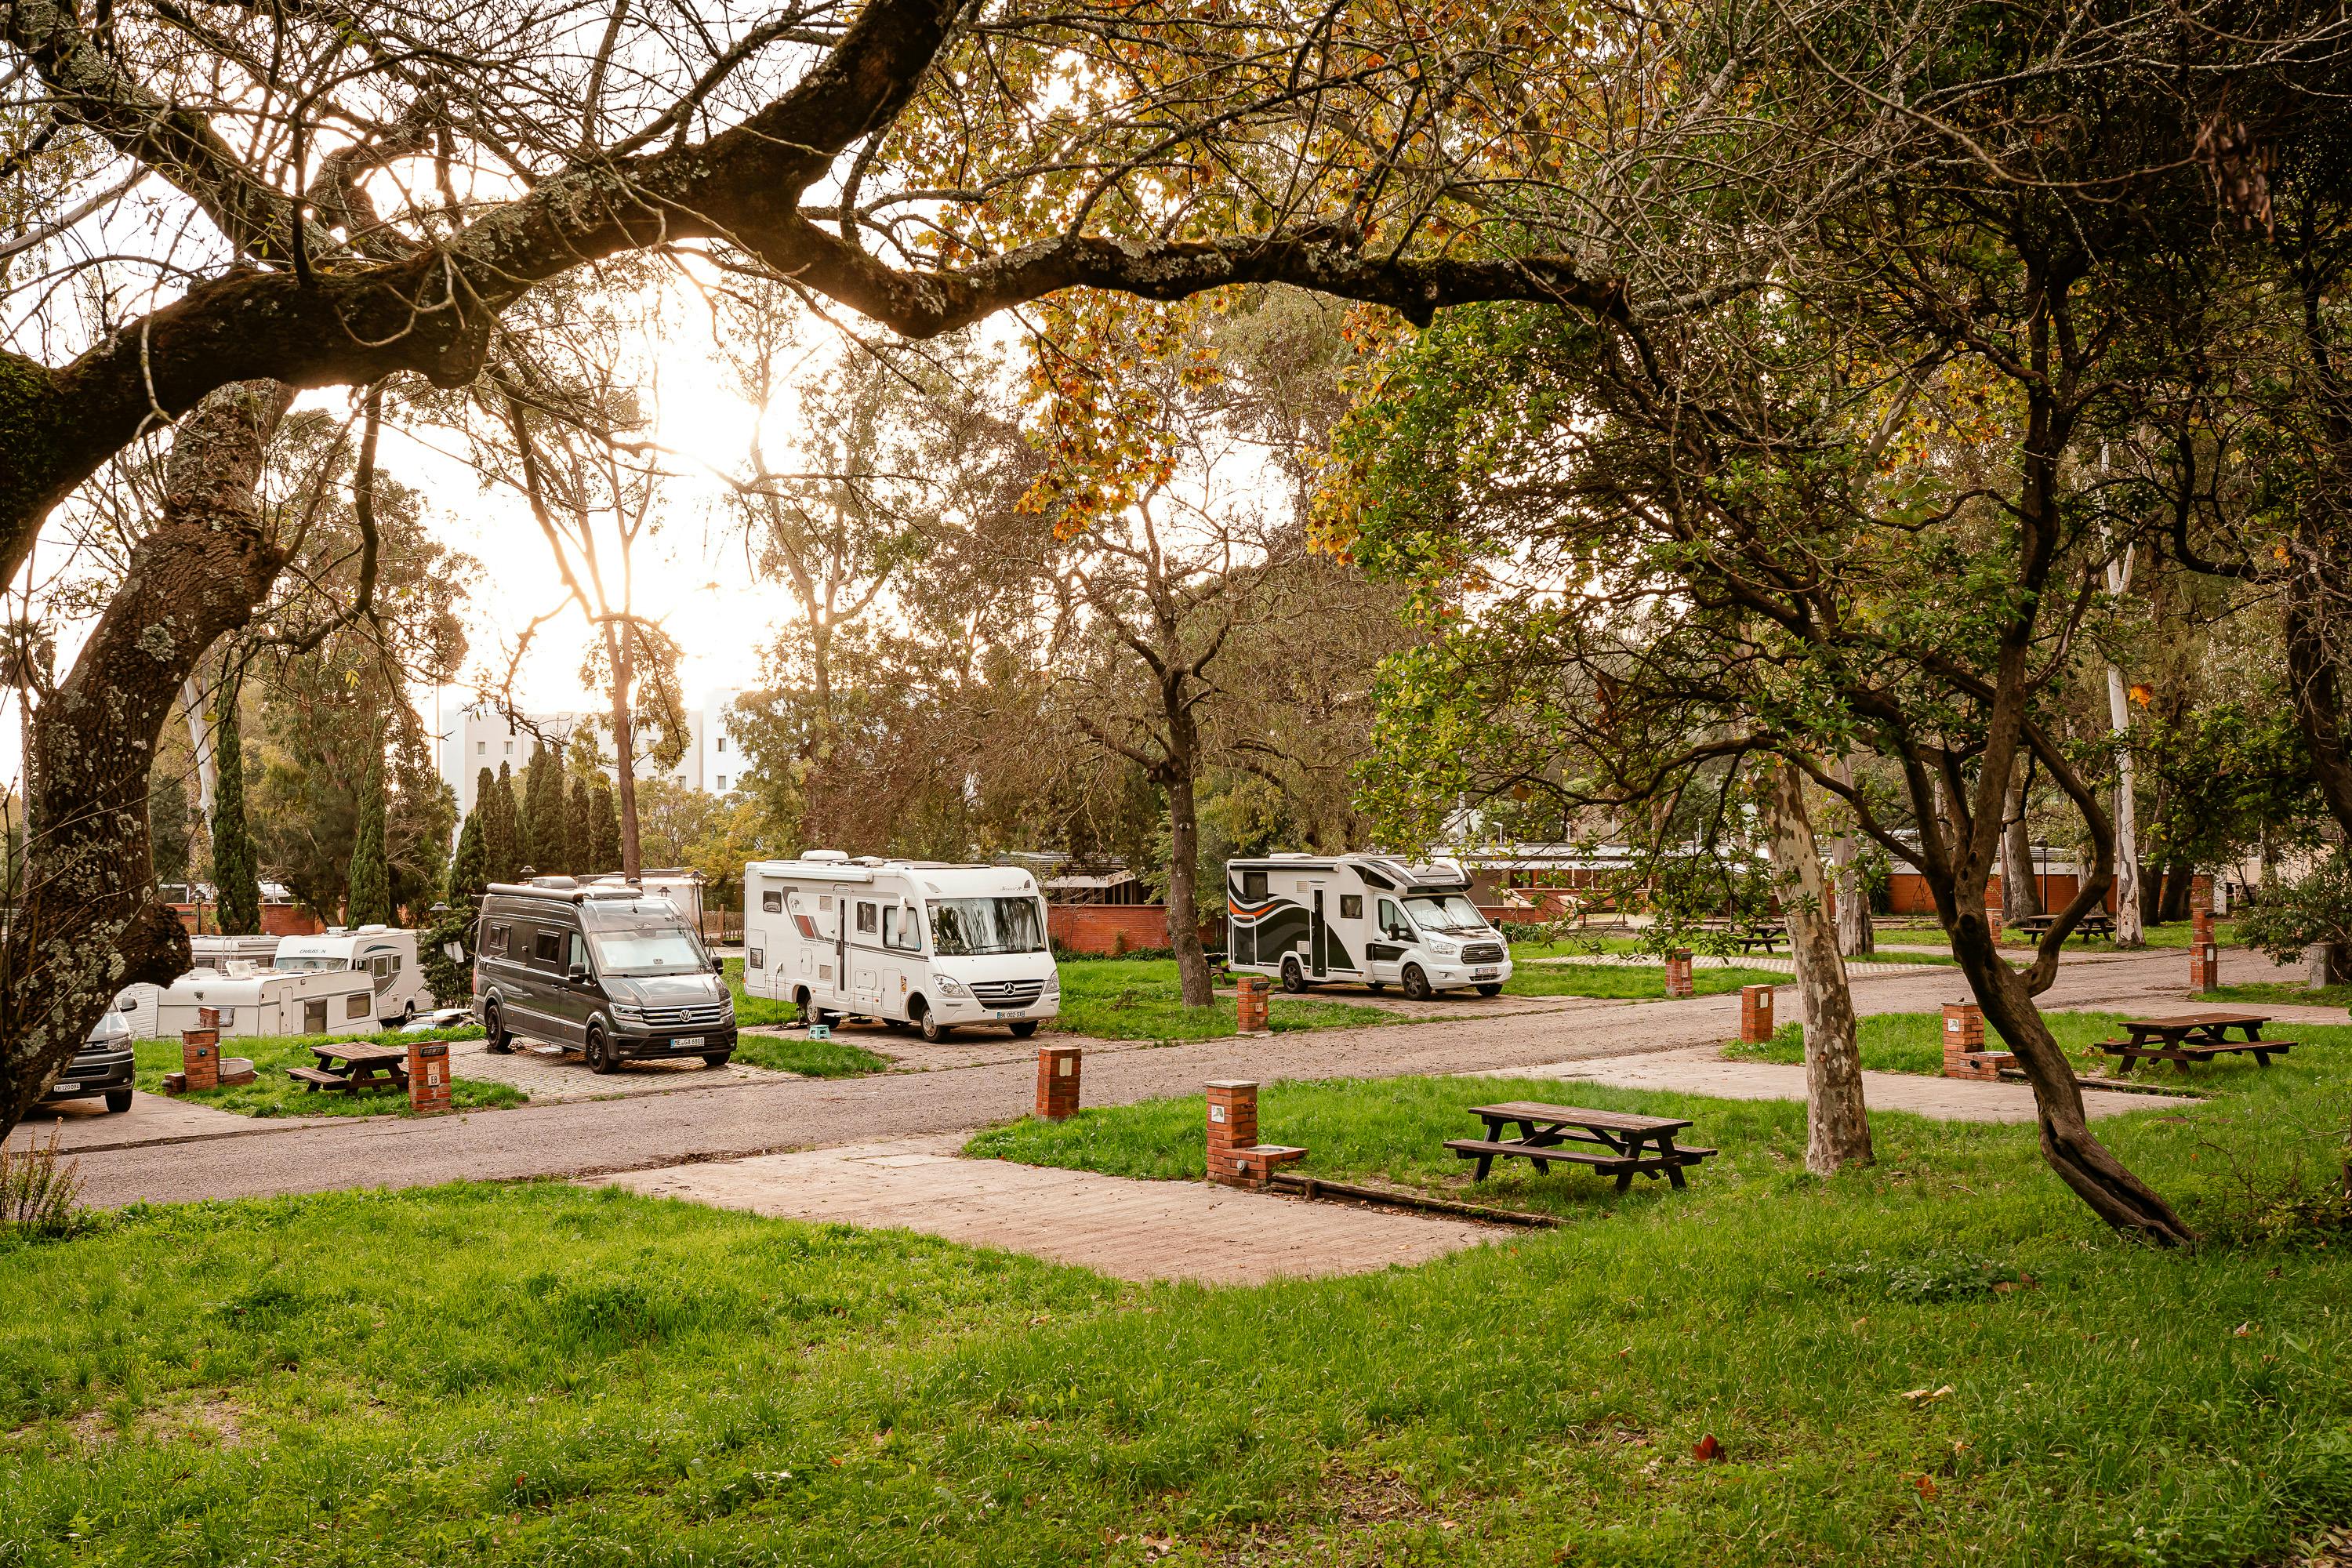 Lisboa Camping oferece parques de campismo totalmente equipados para autocaravanas perto de Lisboa